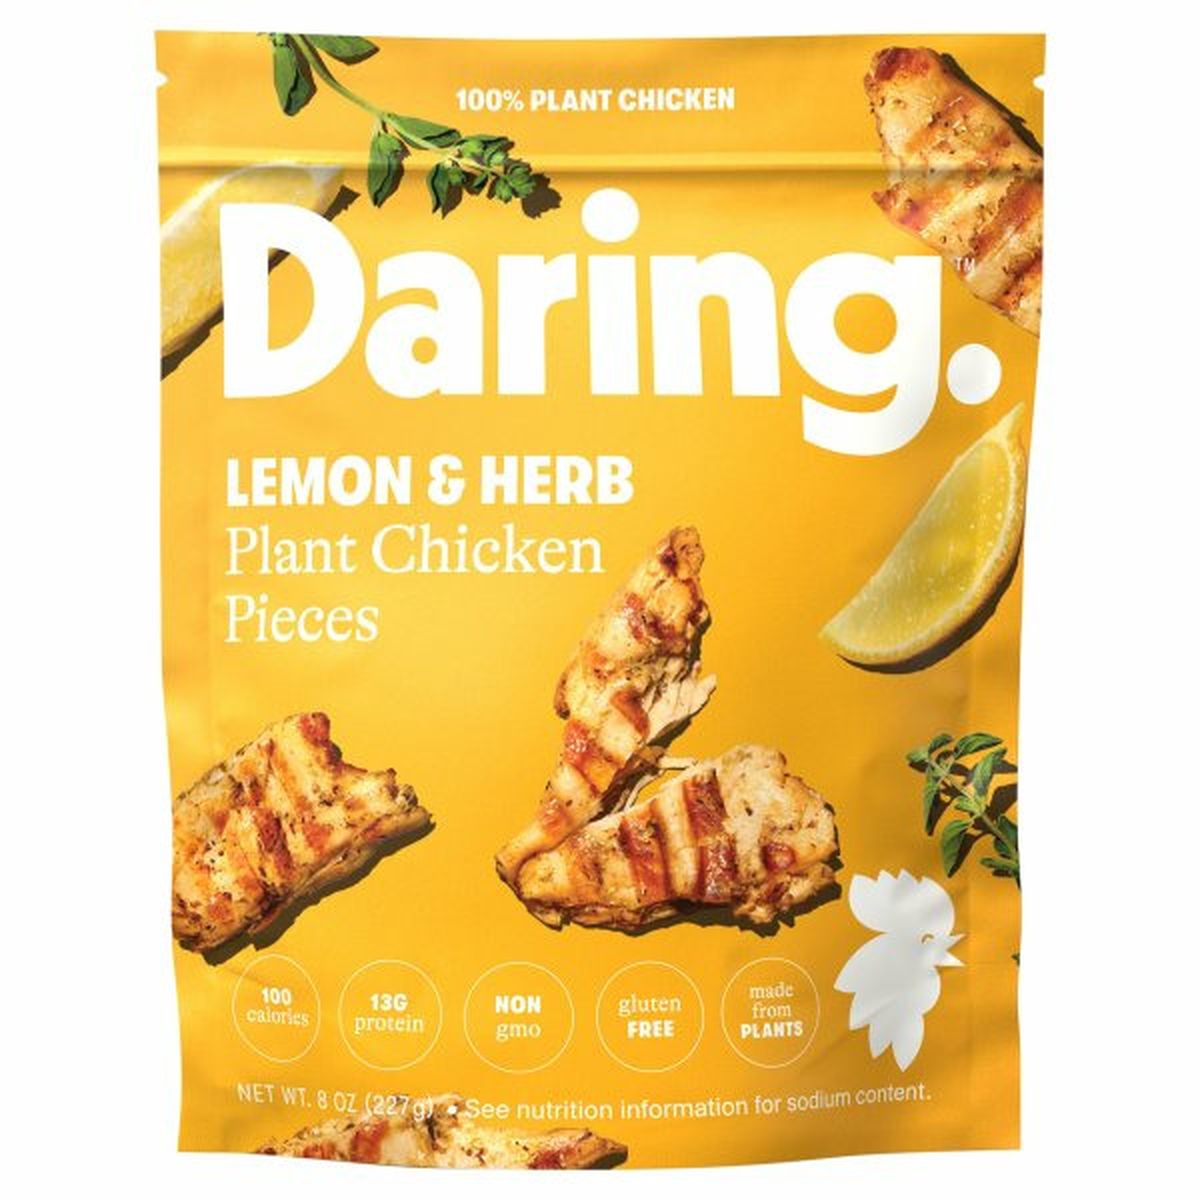 Calories in Daring Plant Chicken Pieces, Lemon & Herb